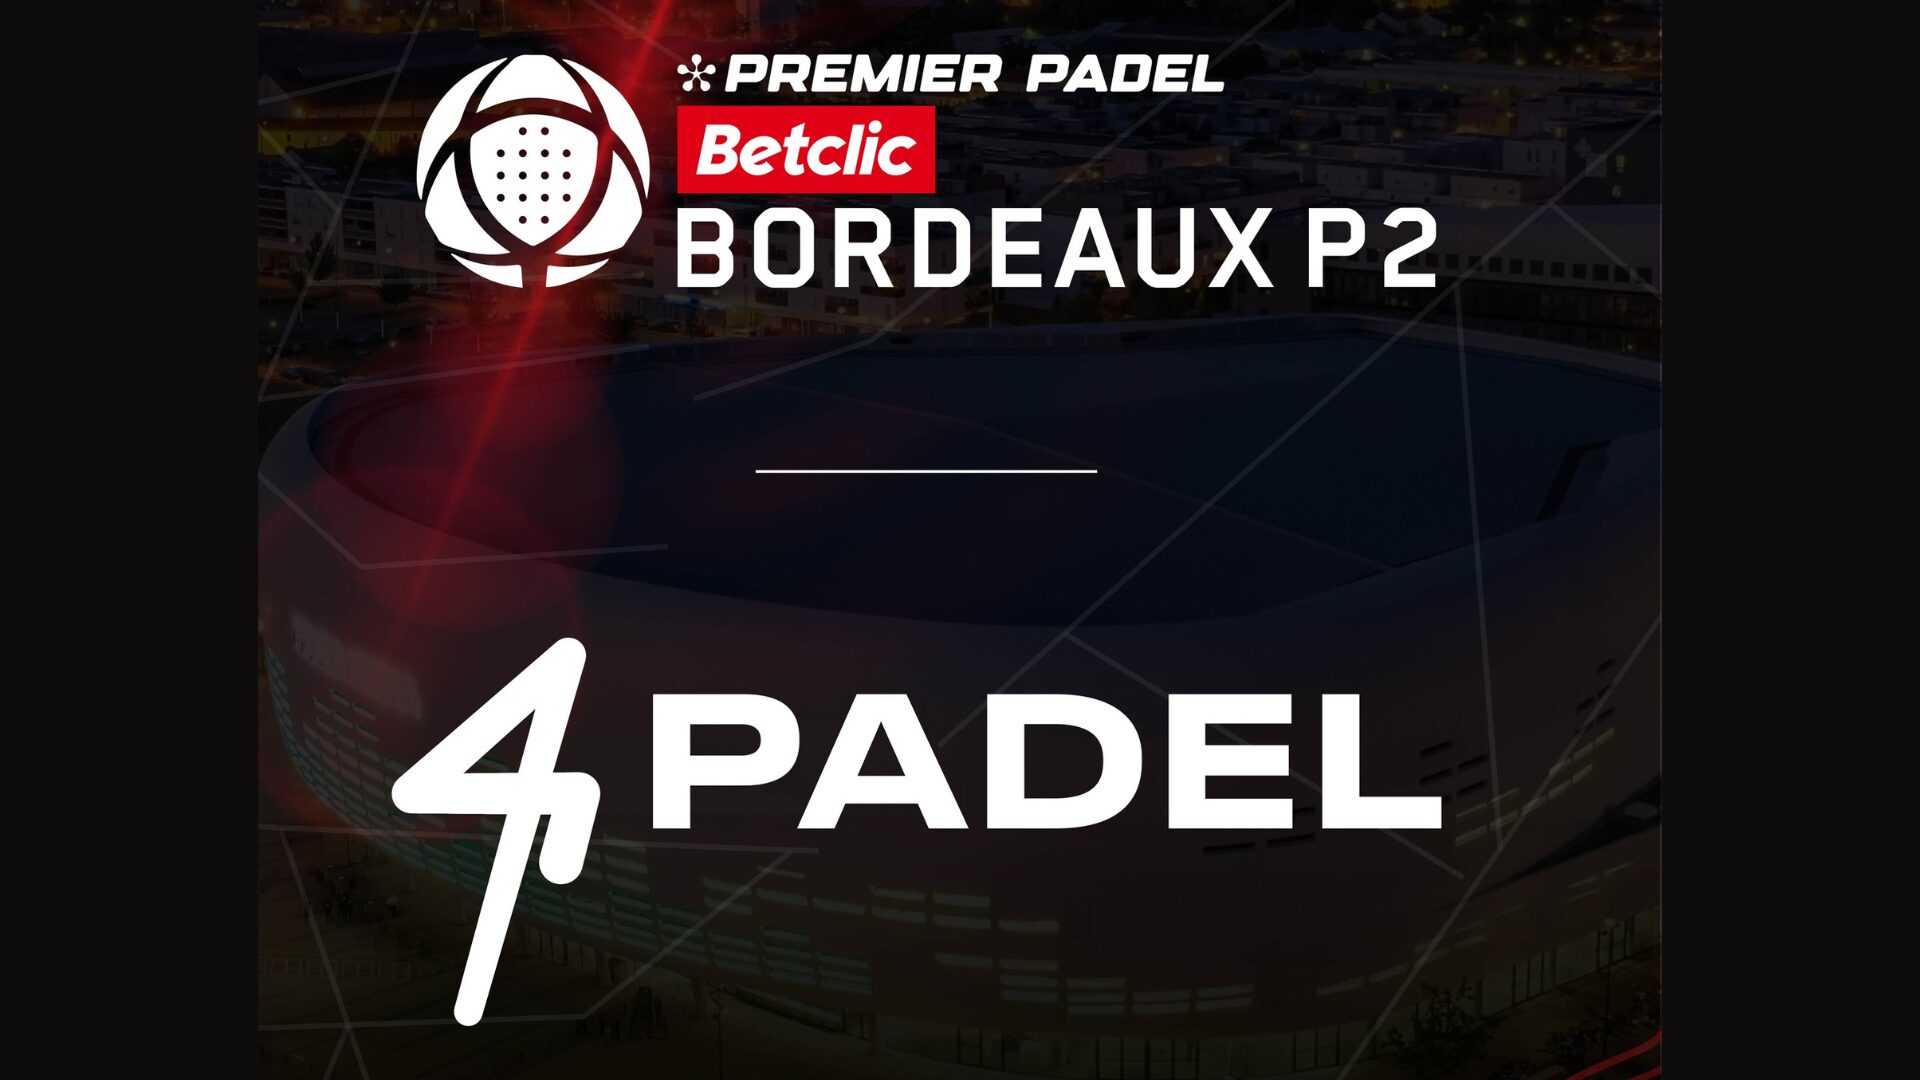 之间的伙伴关系 Premier Padel 波尔多 P2 和 4Padel 波尔多